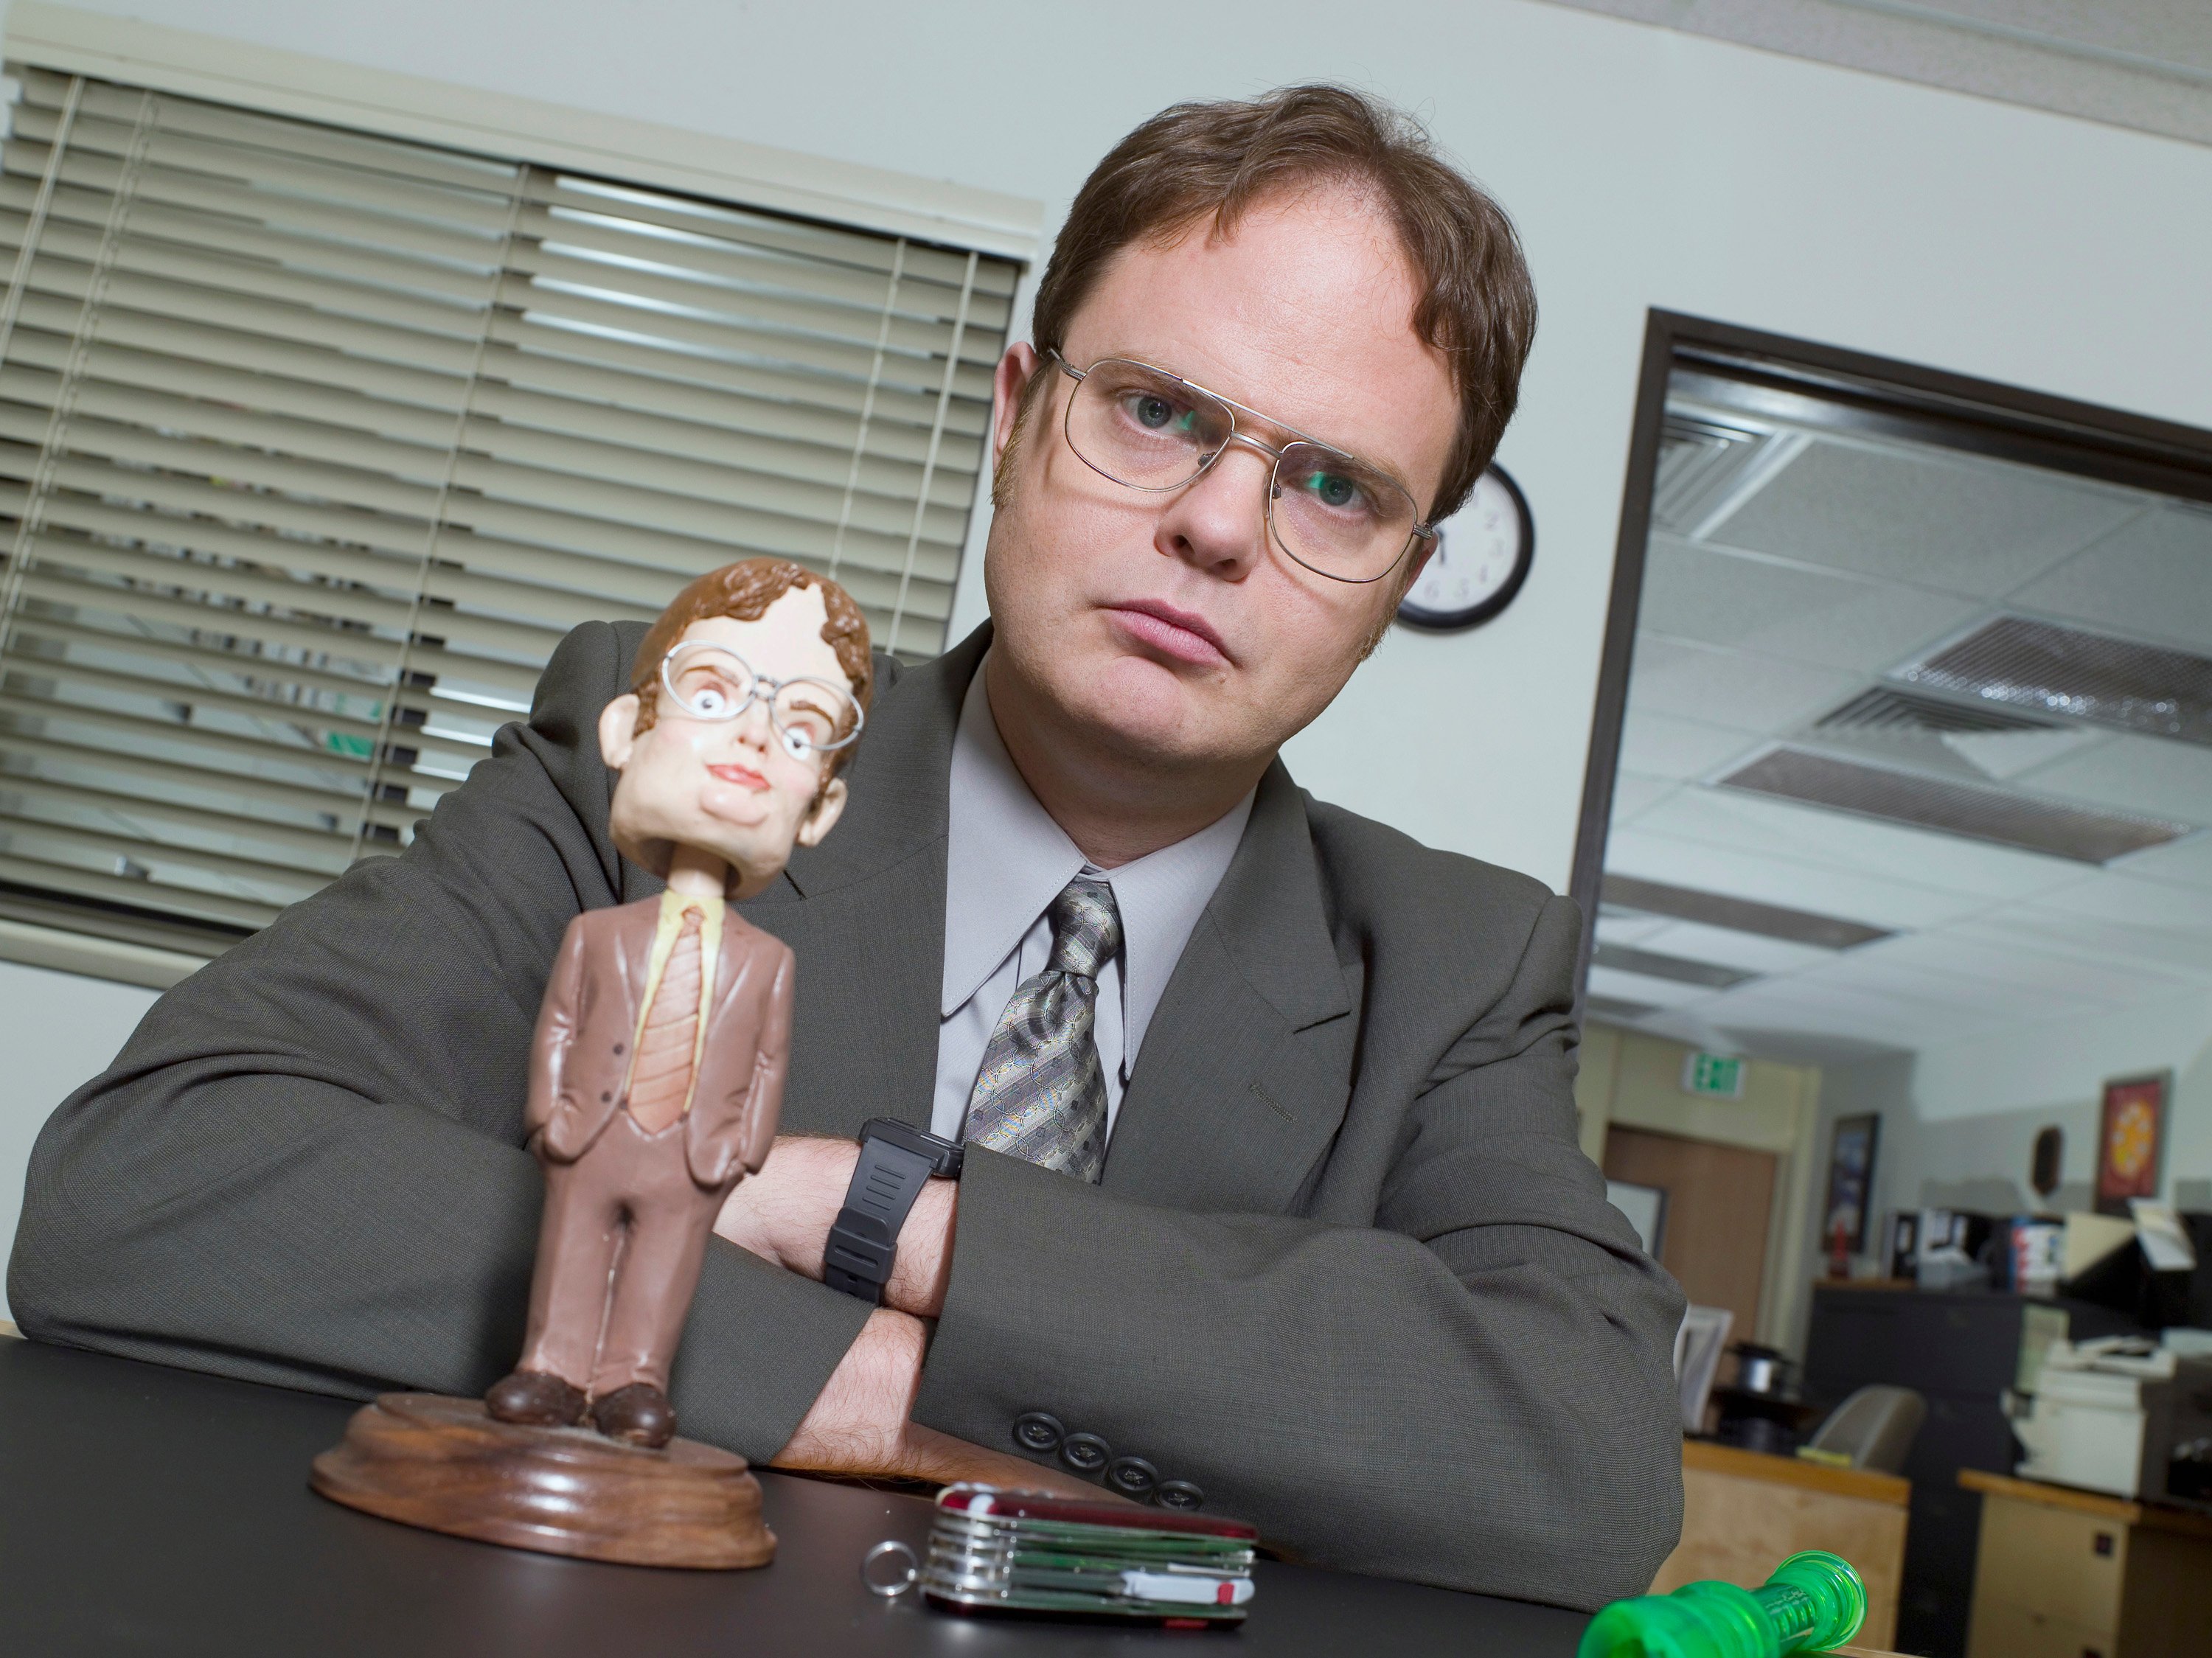 Rainn Wilson as Dwight in 'The Office'